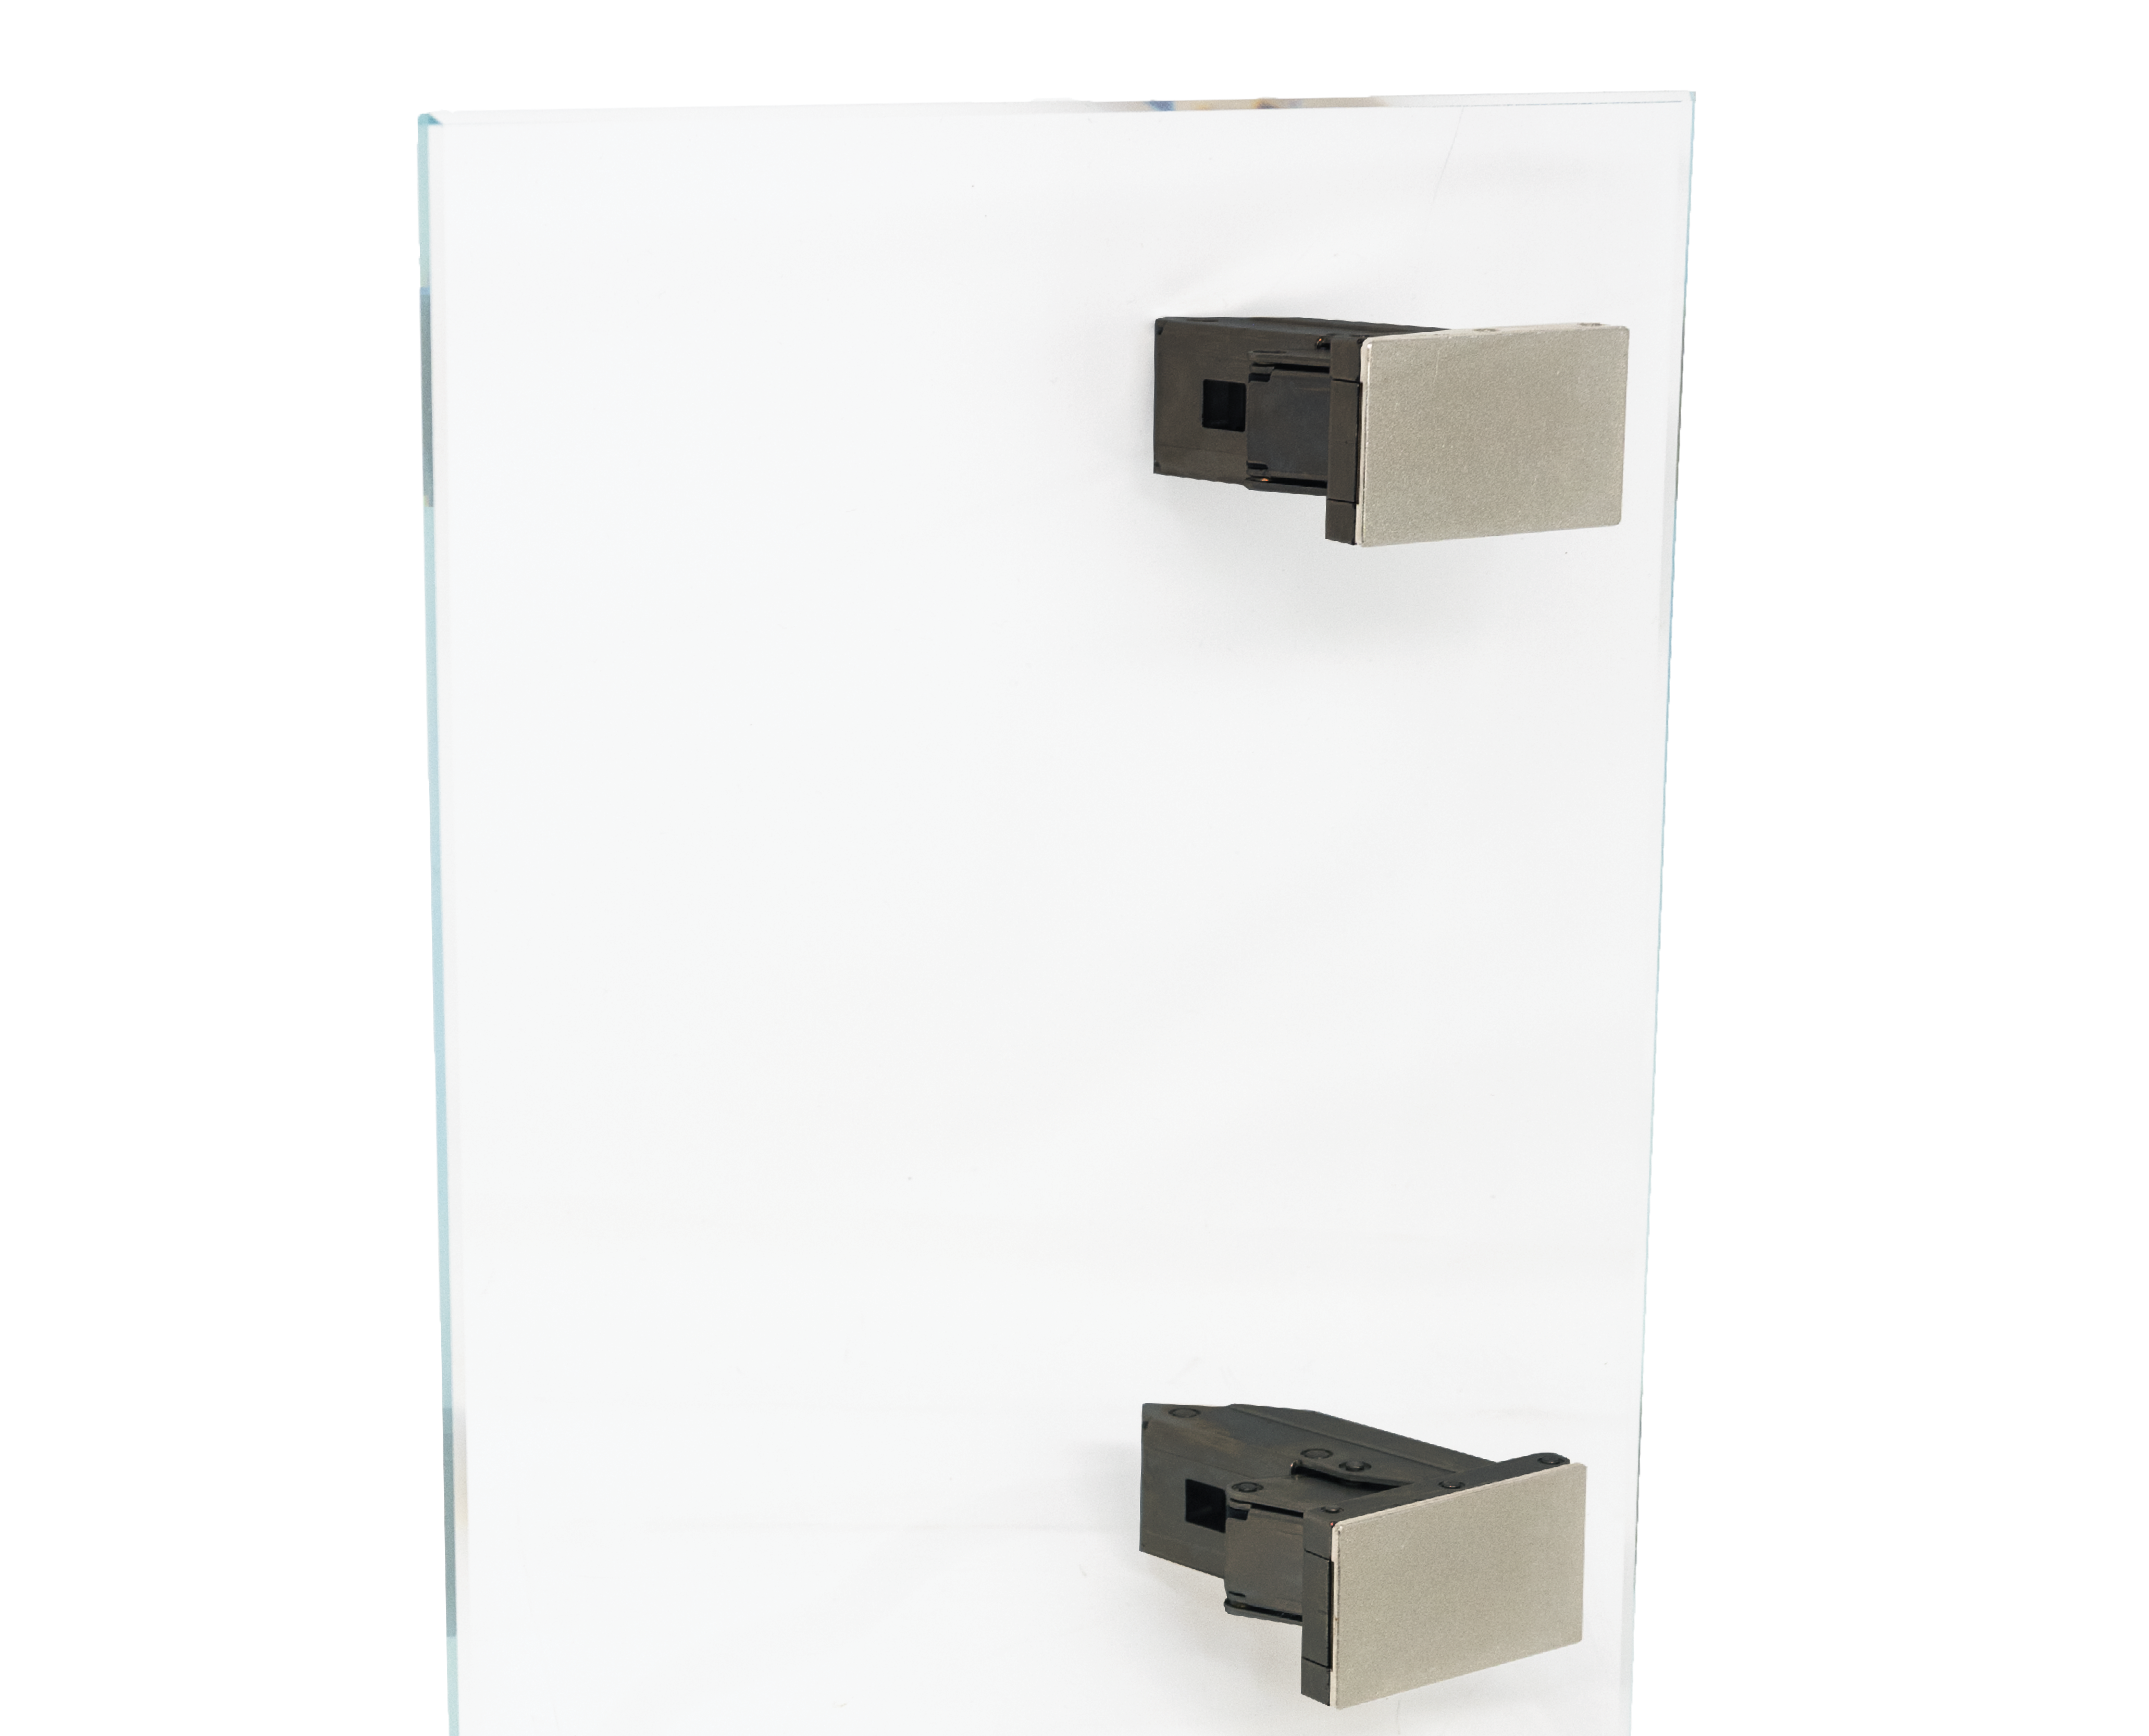 Custom Frameless Glass Cabinet Doors - ºelement Designs